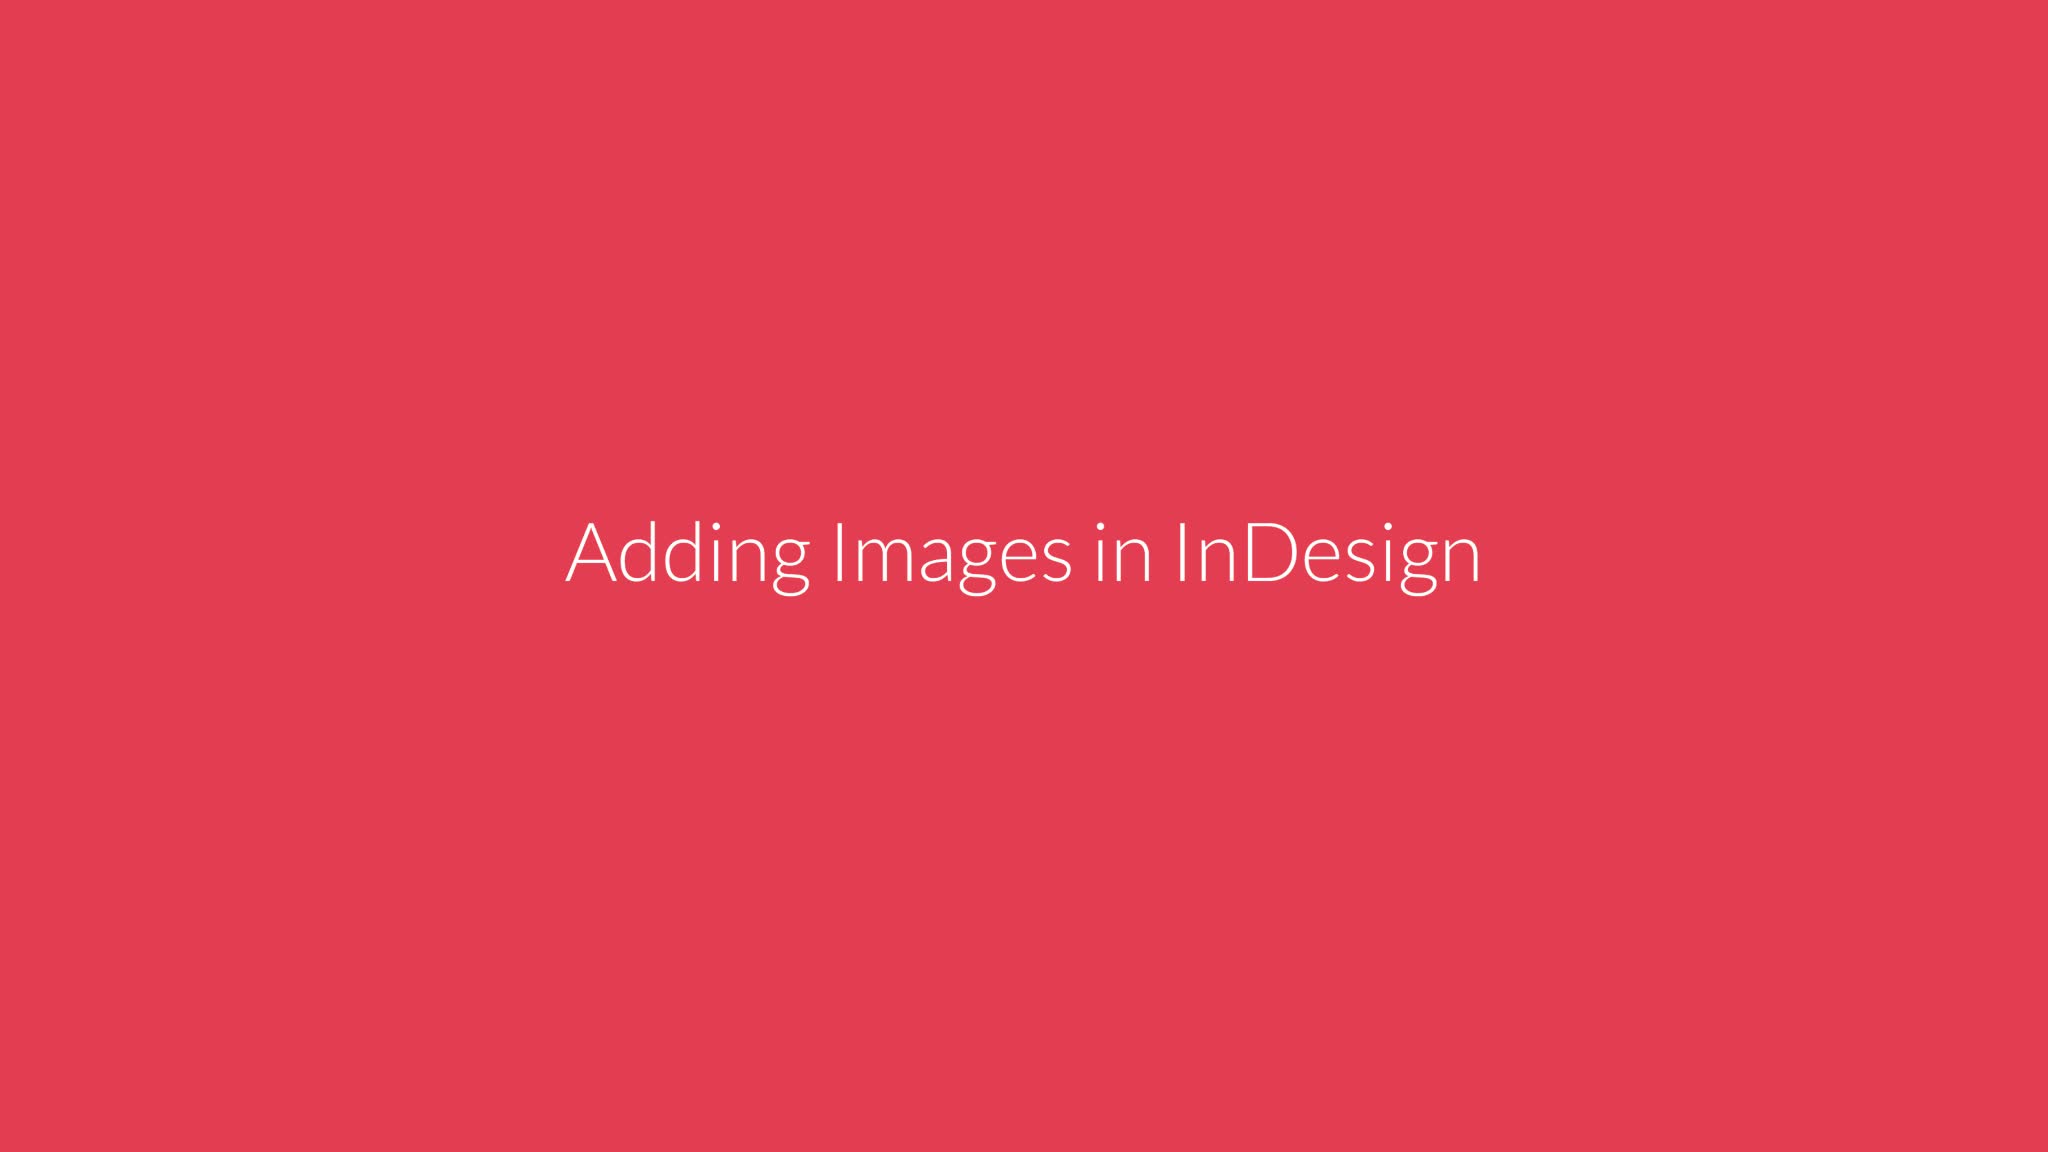 Adding Images in InDesign